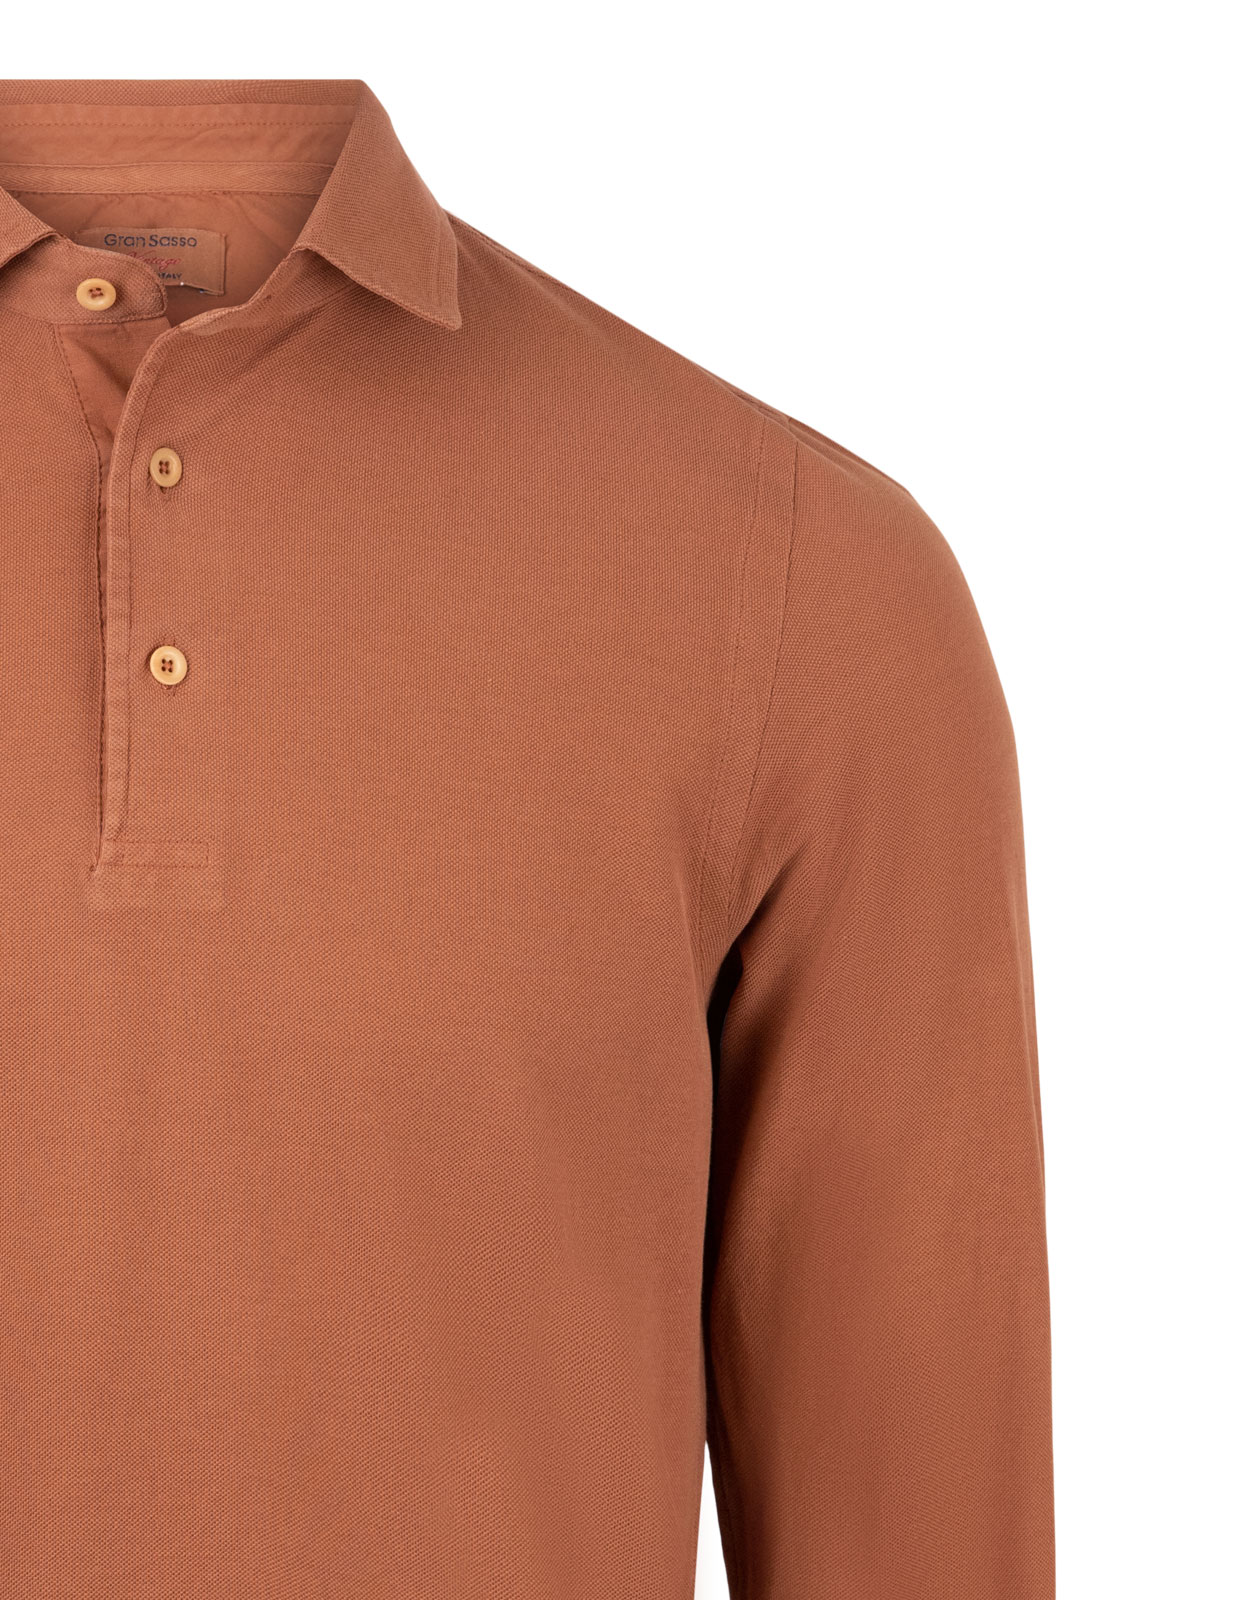 Polo Shirt Long Sleeve Vintage Cotton Camel Stl 58